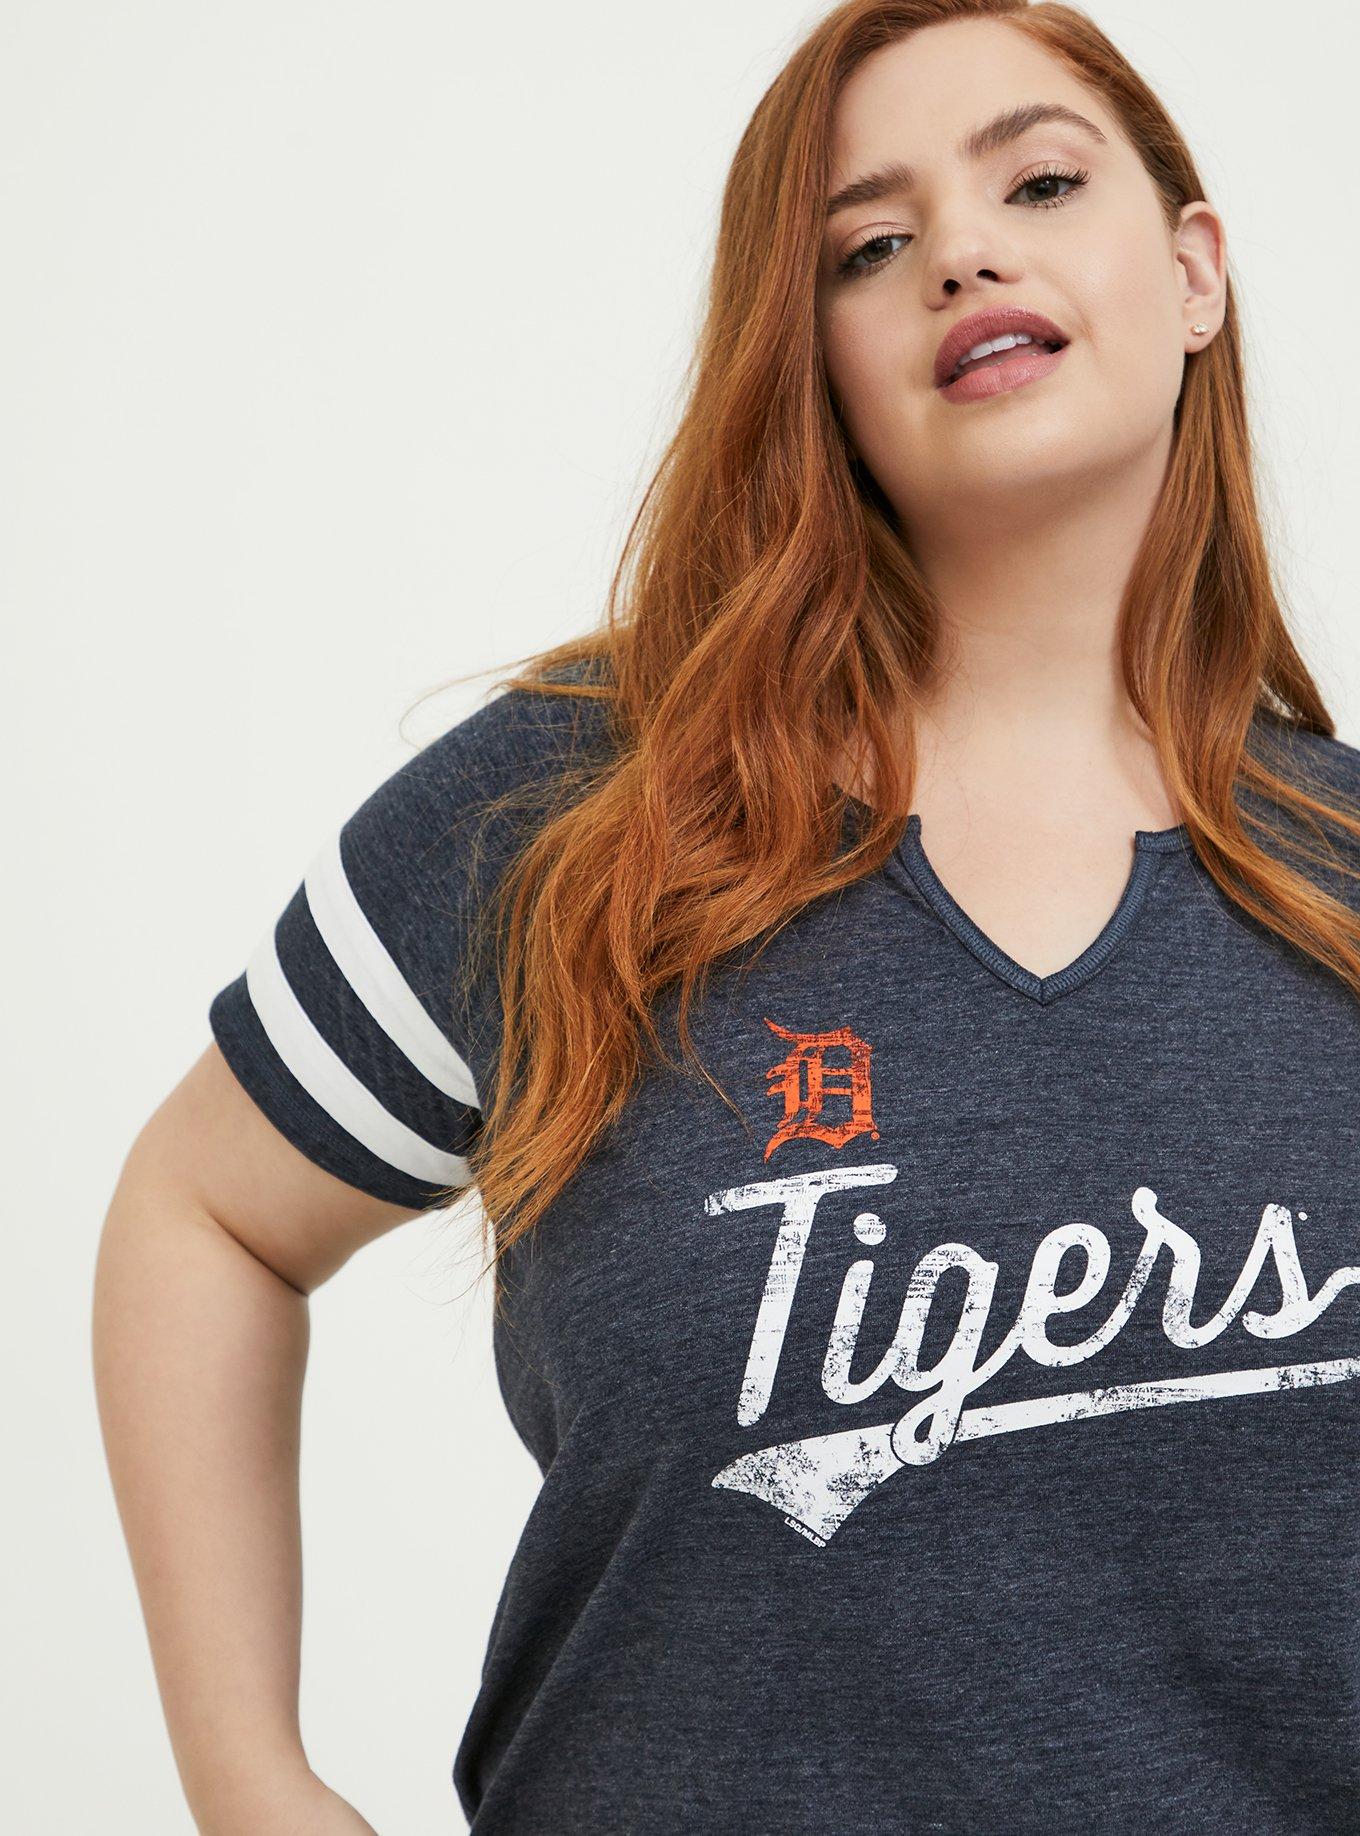 Vintage Detroit Tigers MLB Baseball Jersey Navy Blue XL, Vintage Online